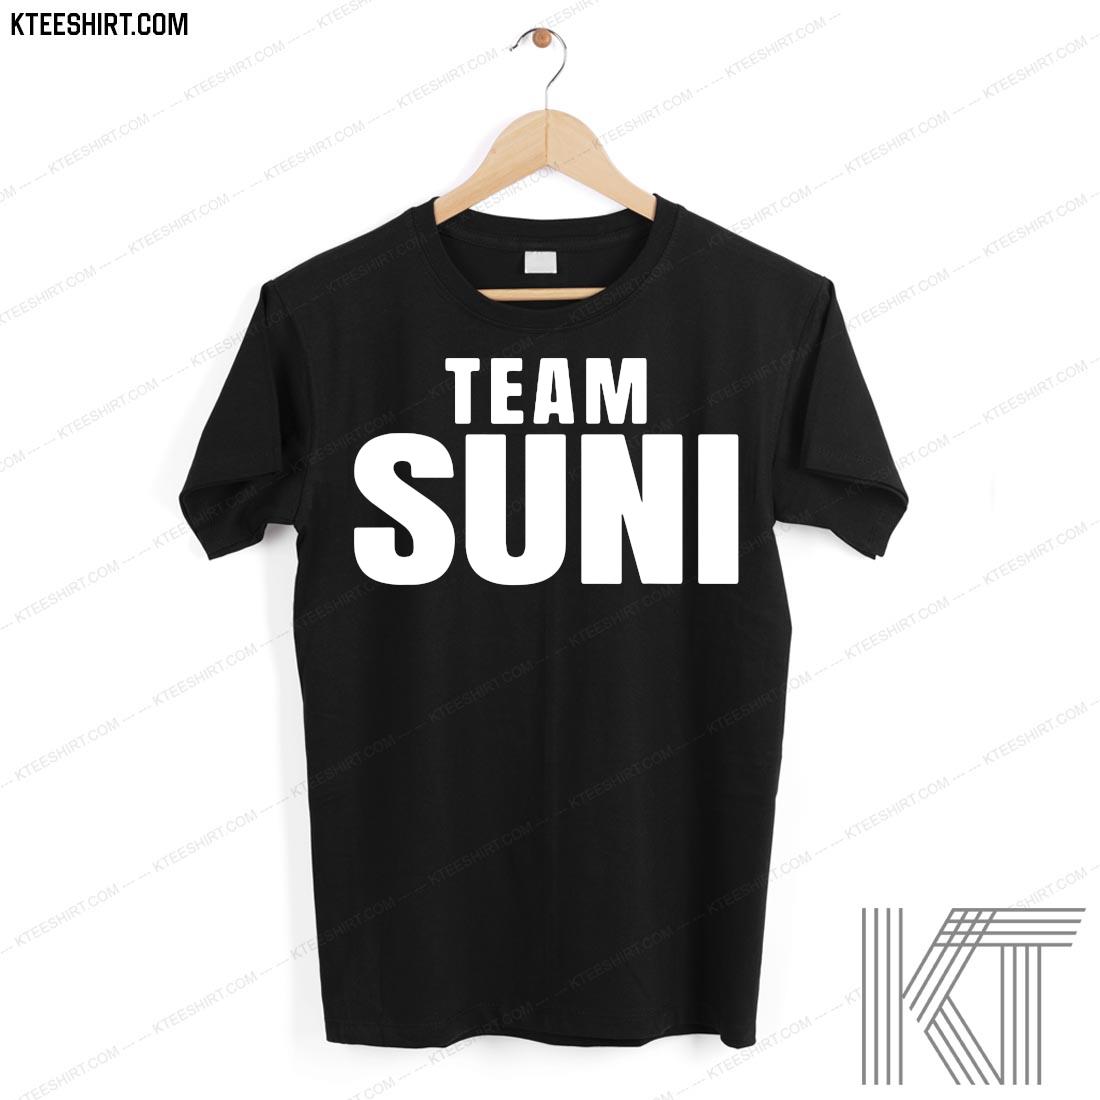 2021 team sunI gymnastics shirt